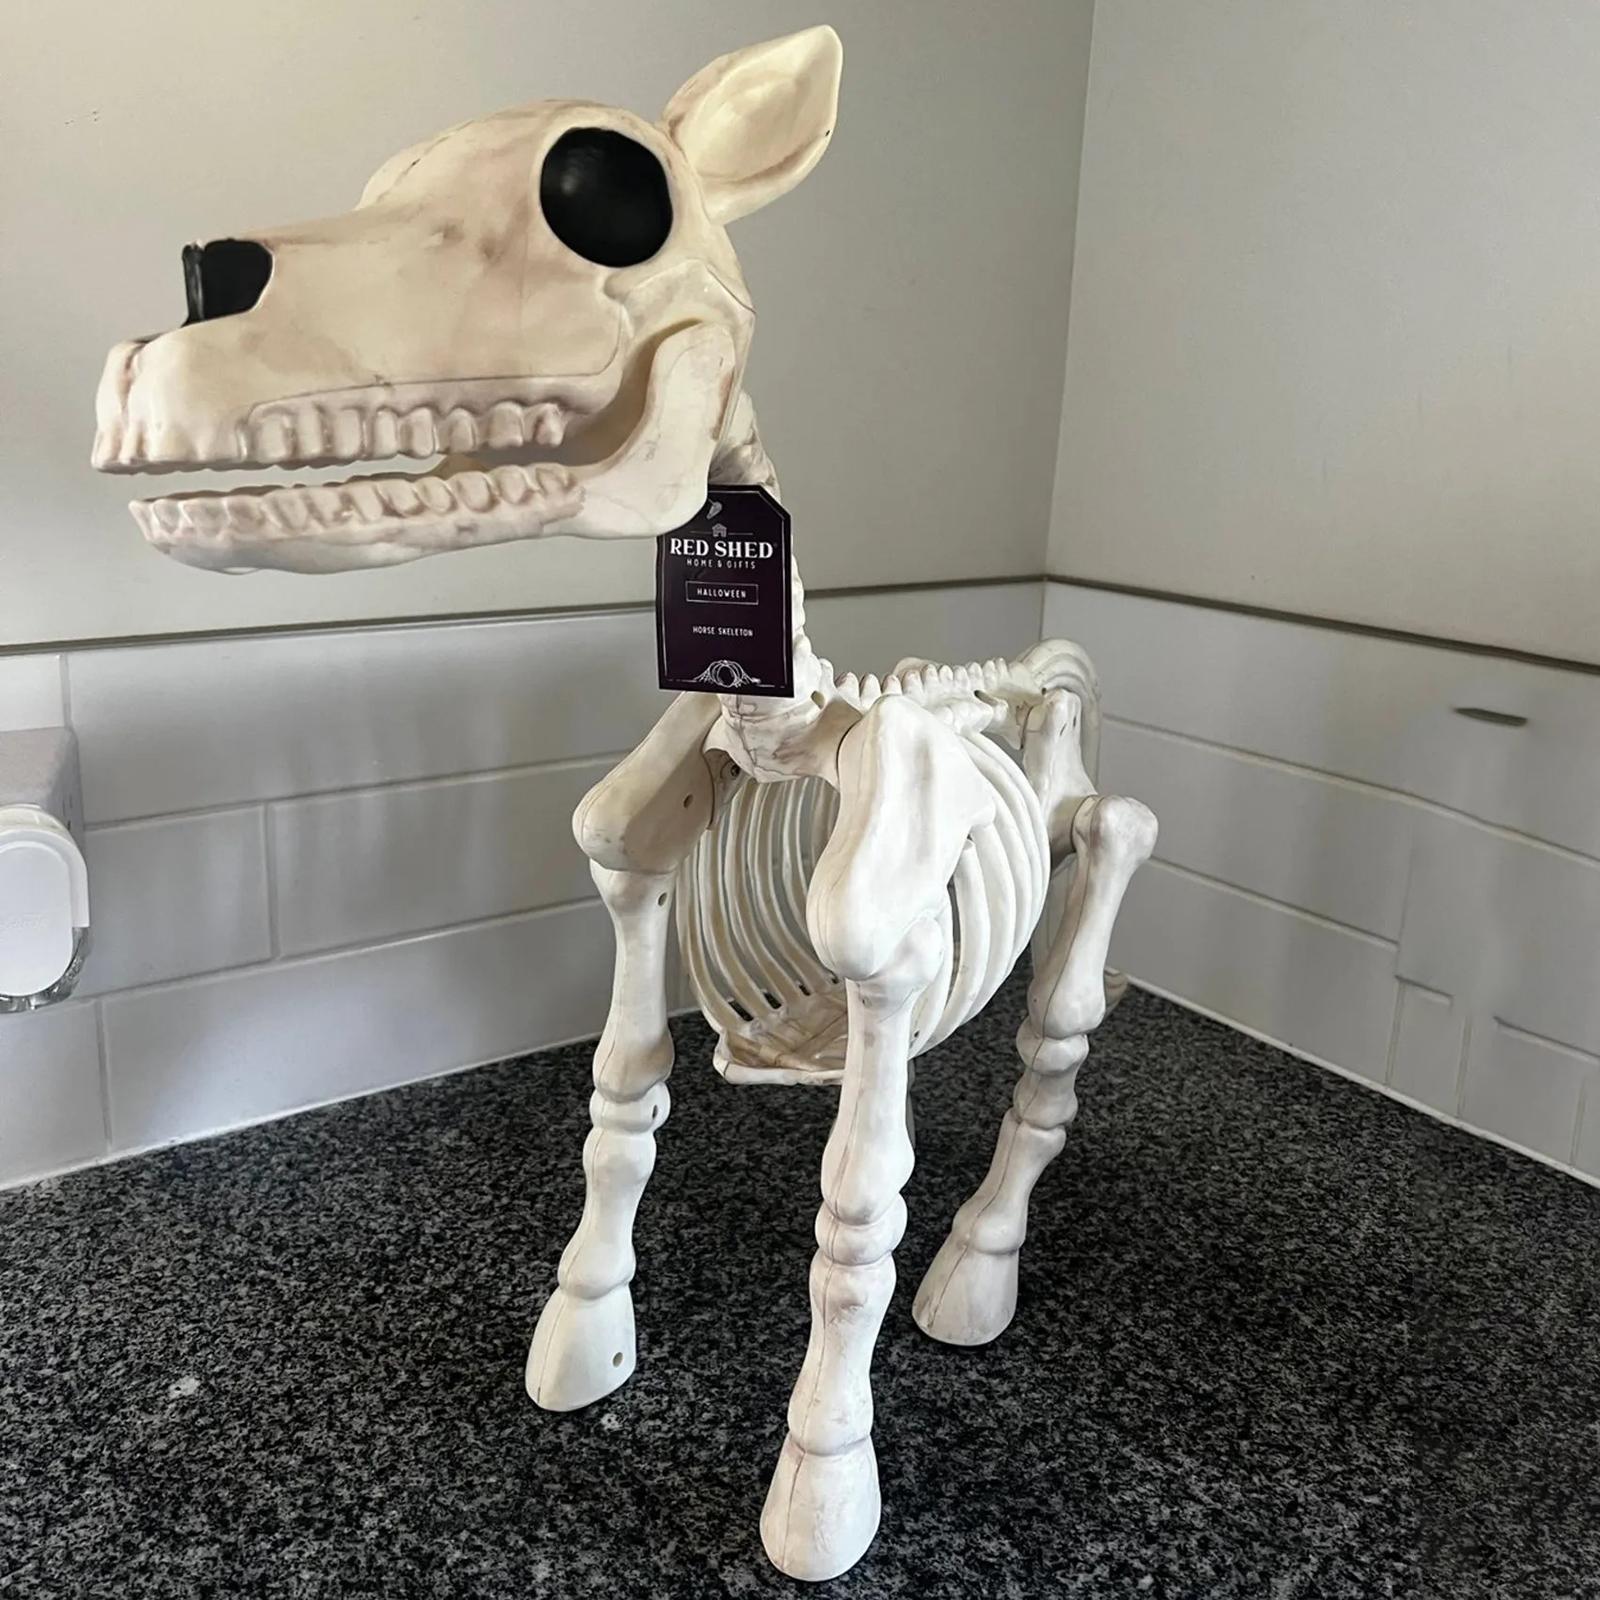 Halloween Horse Skeleton Figurine Skeleton Statue for Desk Party Centerpiece